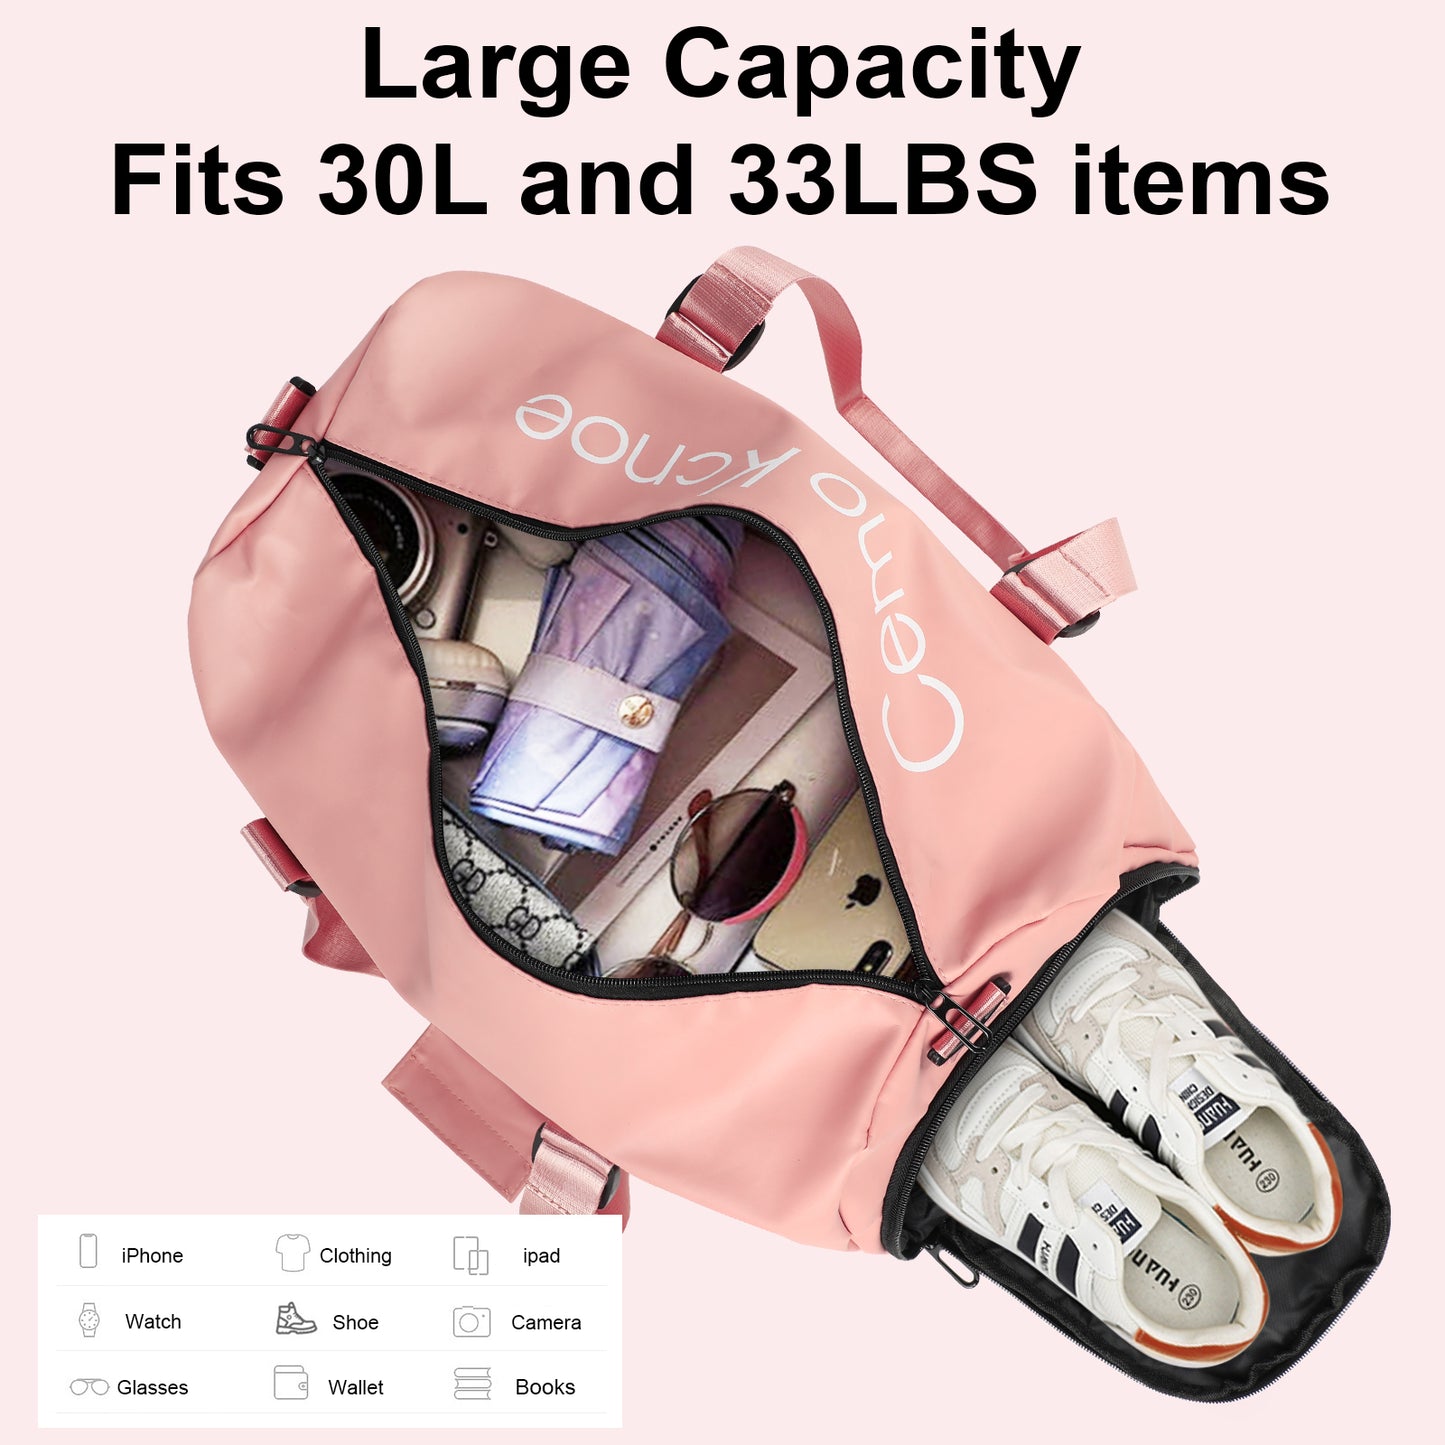 YSSOA Gym Bag, Waterproof Duffel Bag Shoes Compartment, Lightweight Carry